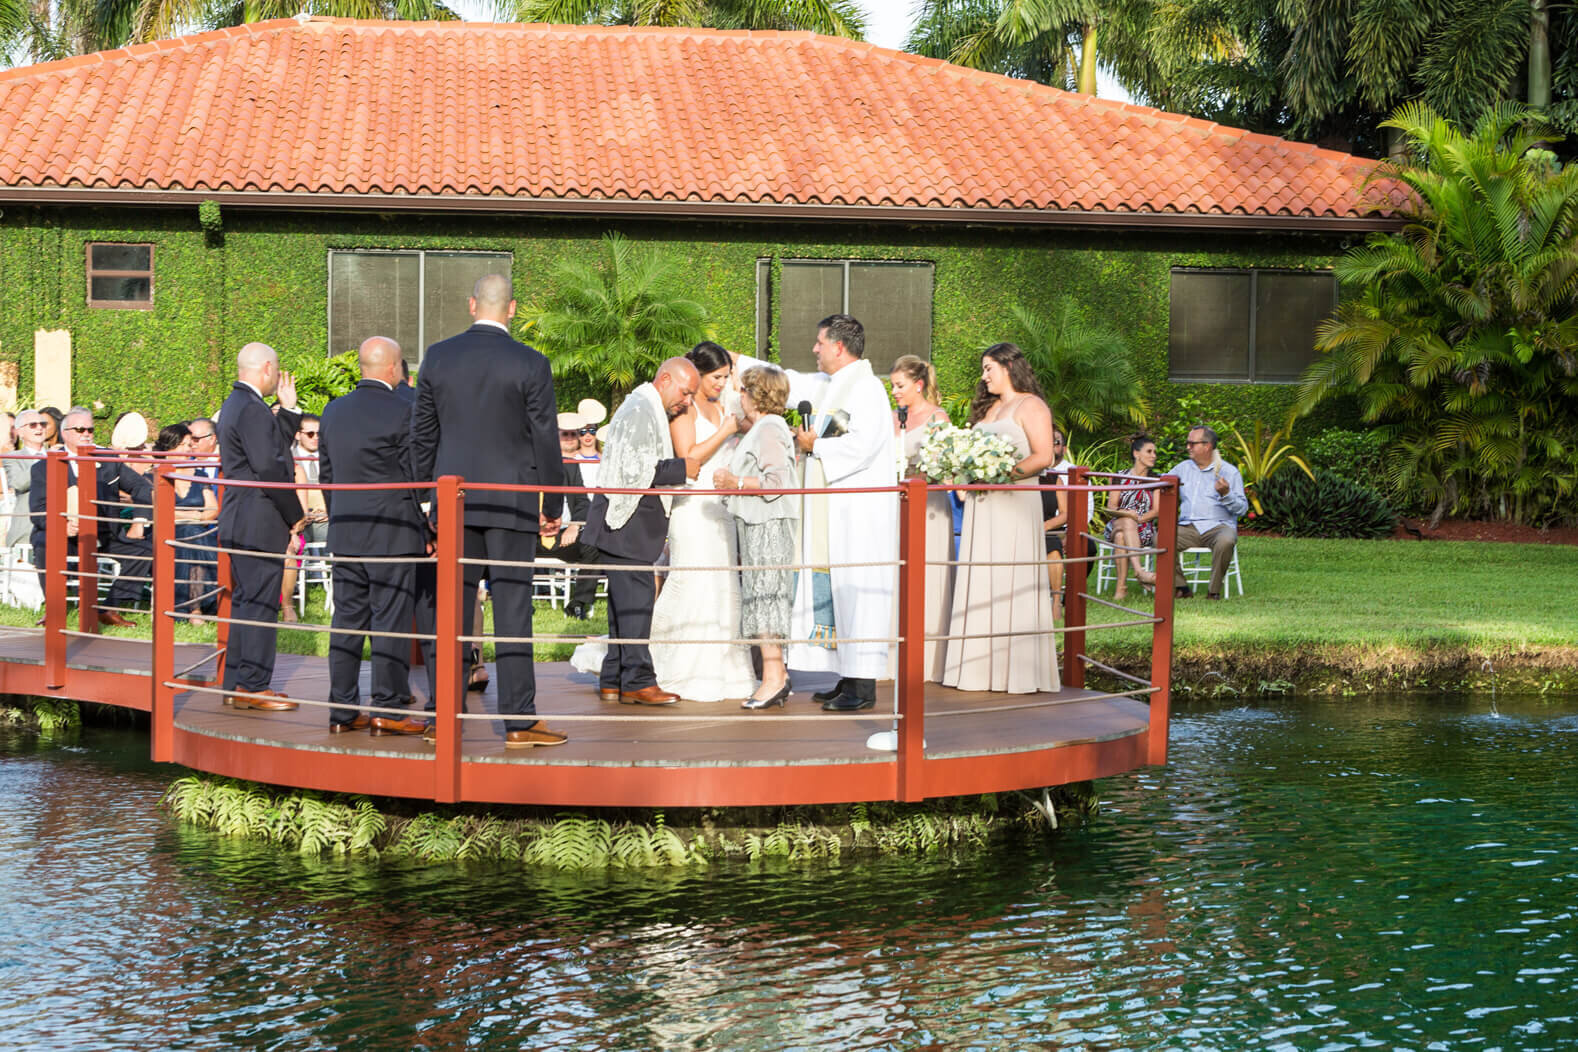 longans-place-wedding-ceremony-on-the-lake-24